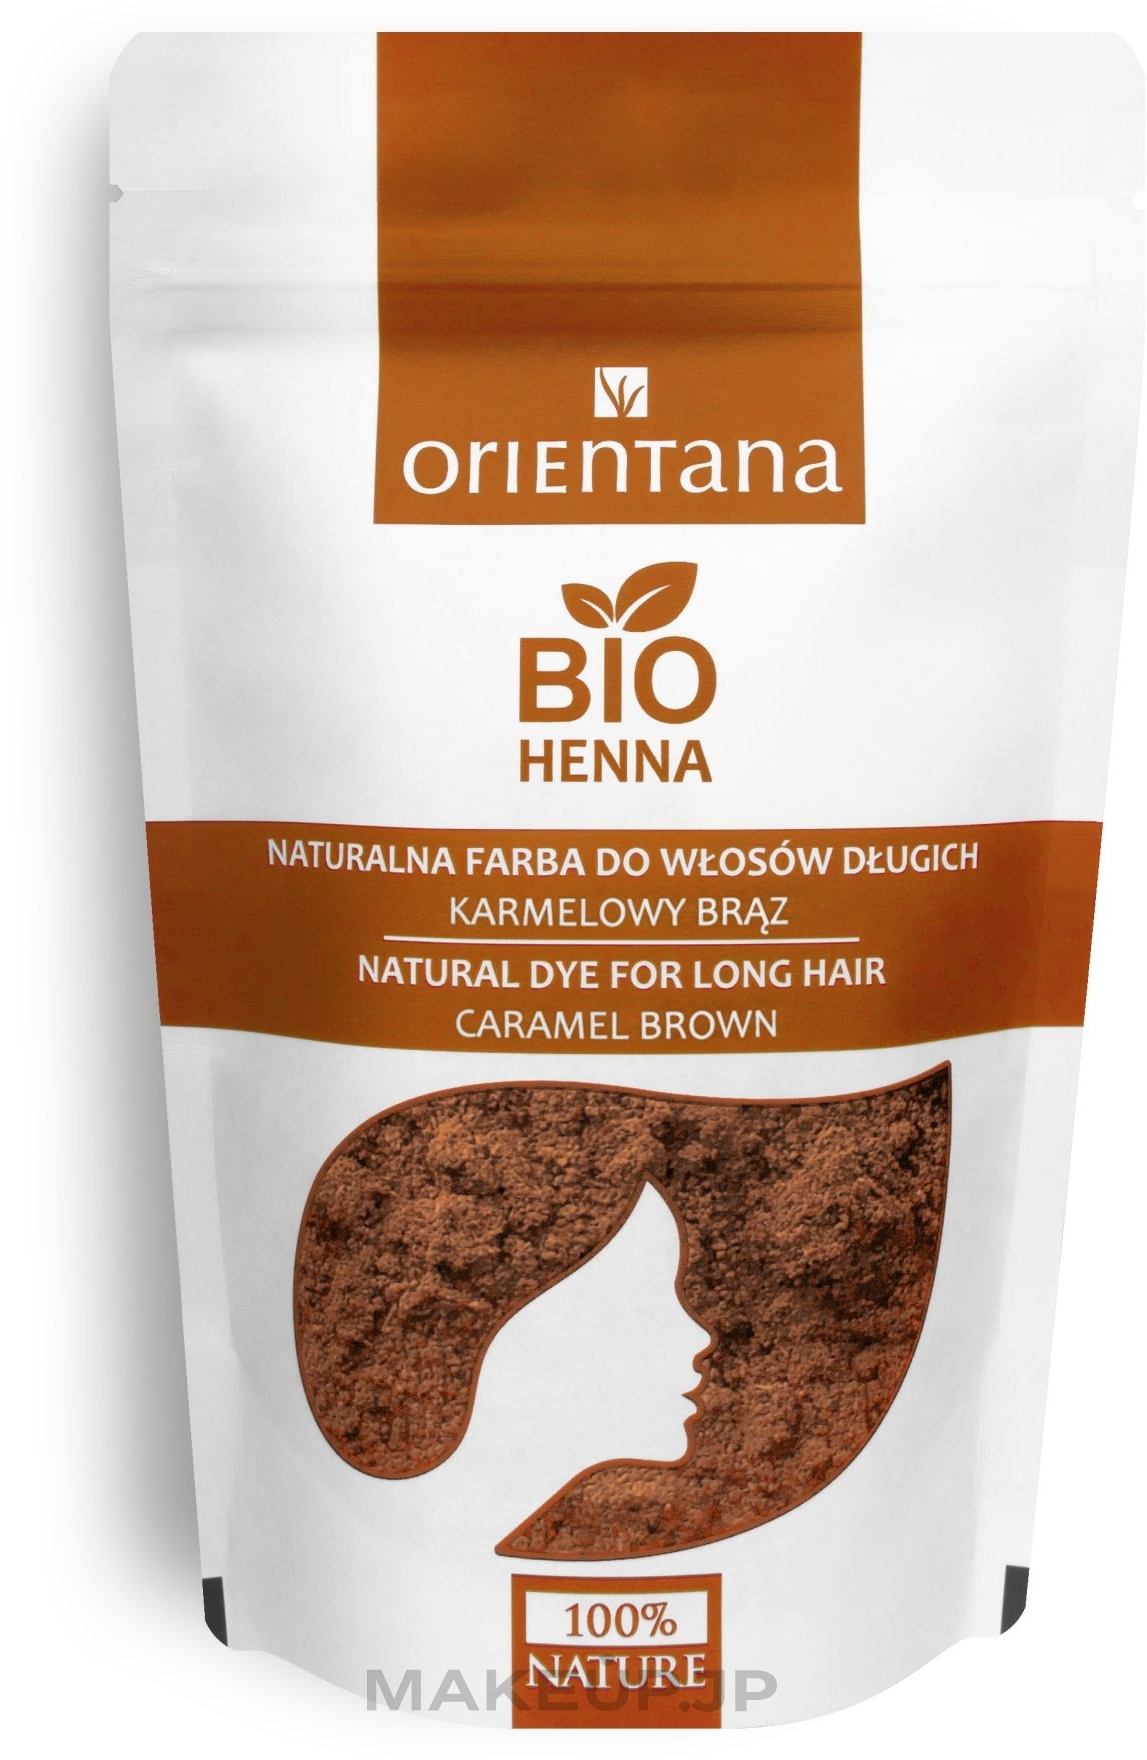 Plant Dye for Long Hair - Orientana Bio Henna Natural For Long Hair — photo Caramel Brown